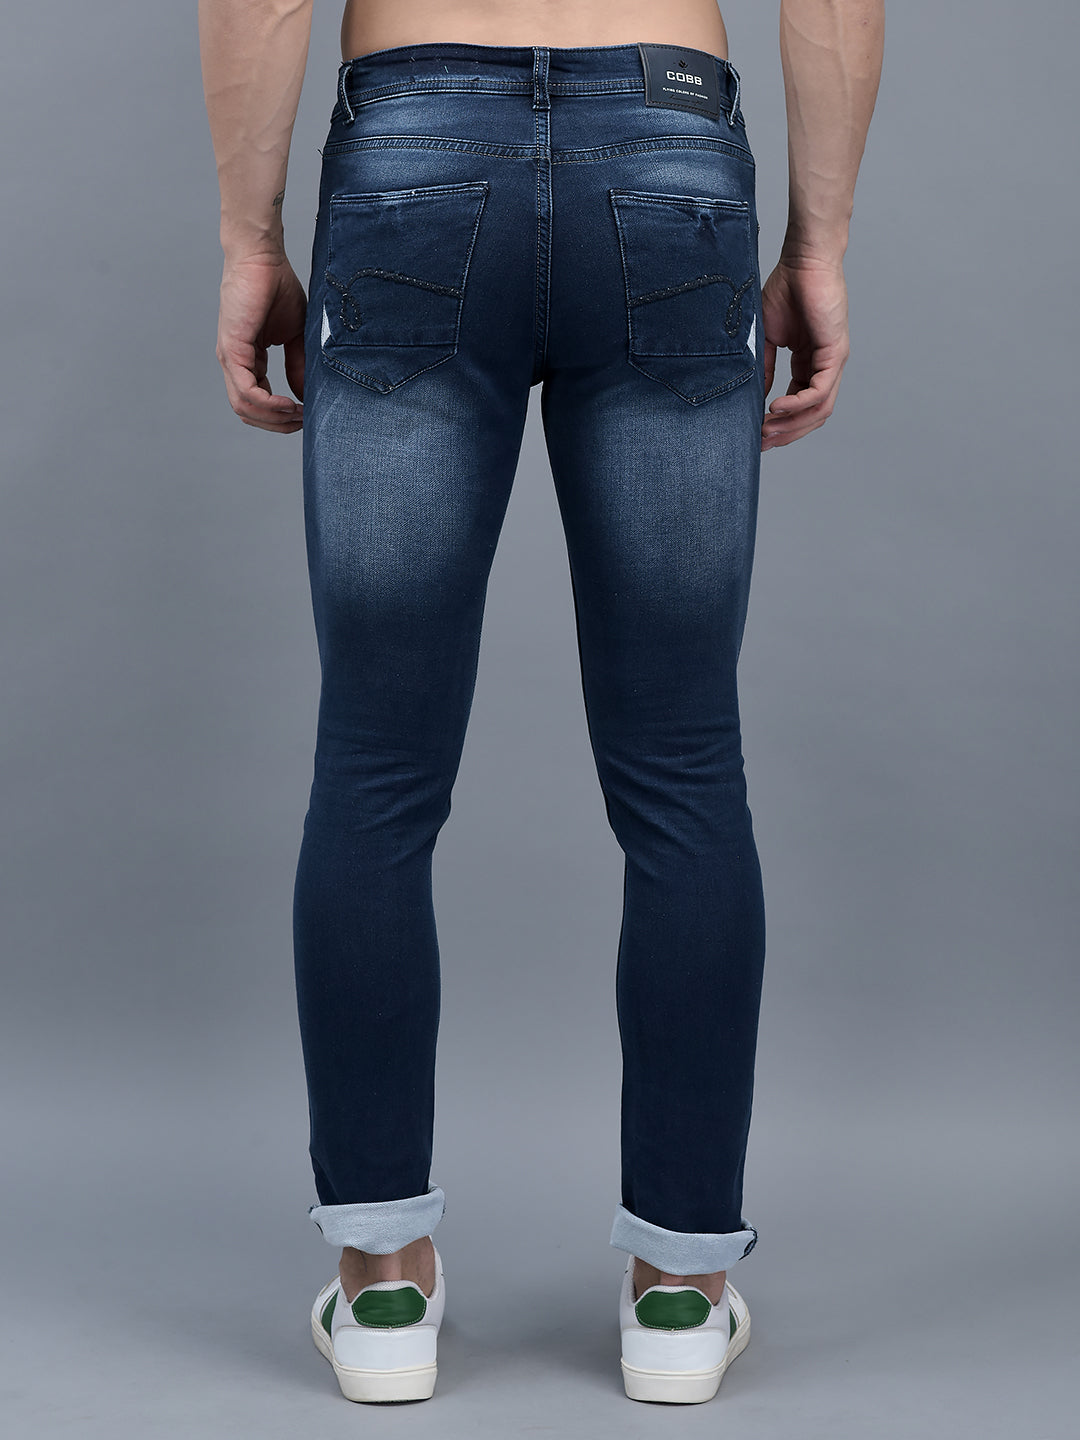 Cobb Blue Ultra Fit Jeans